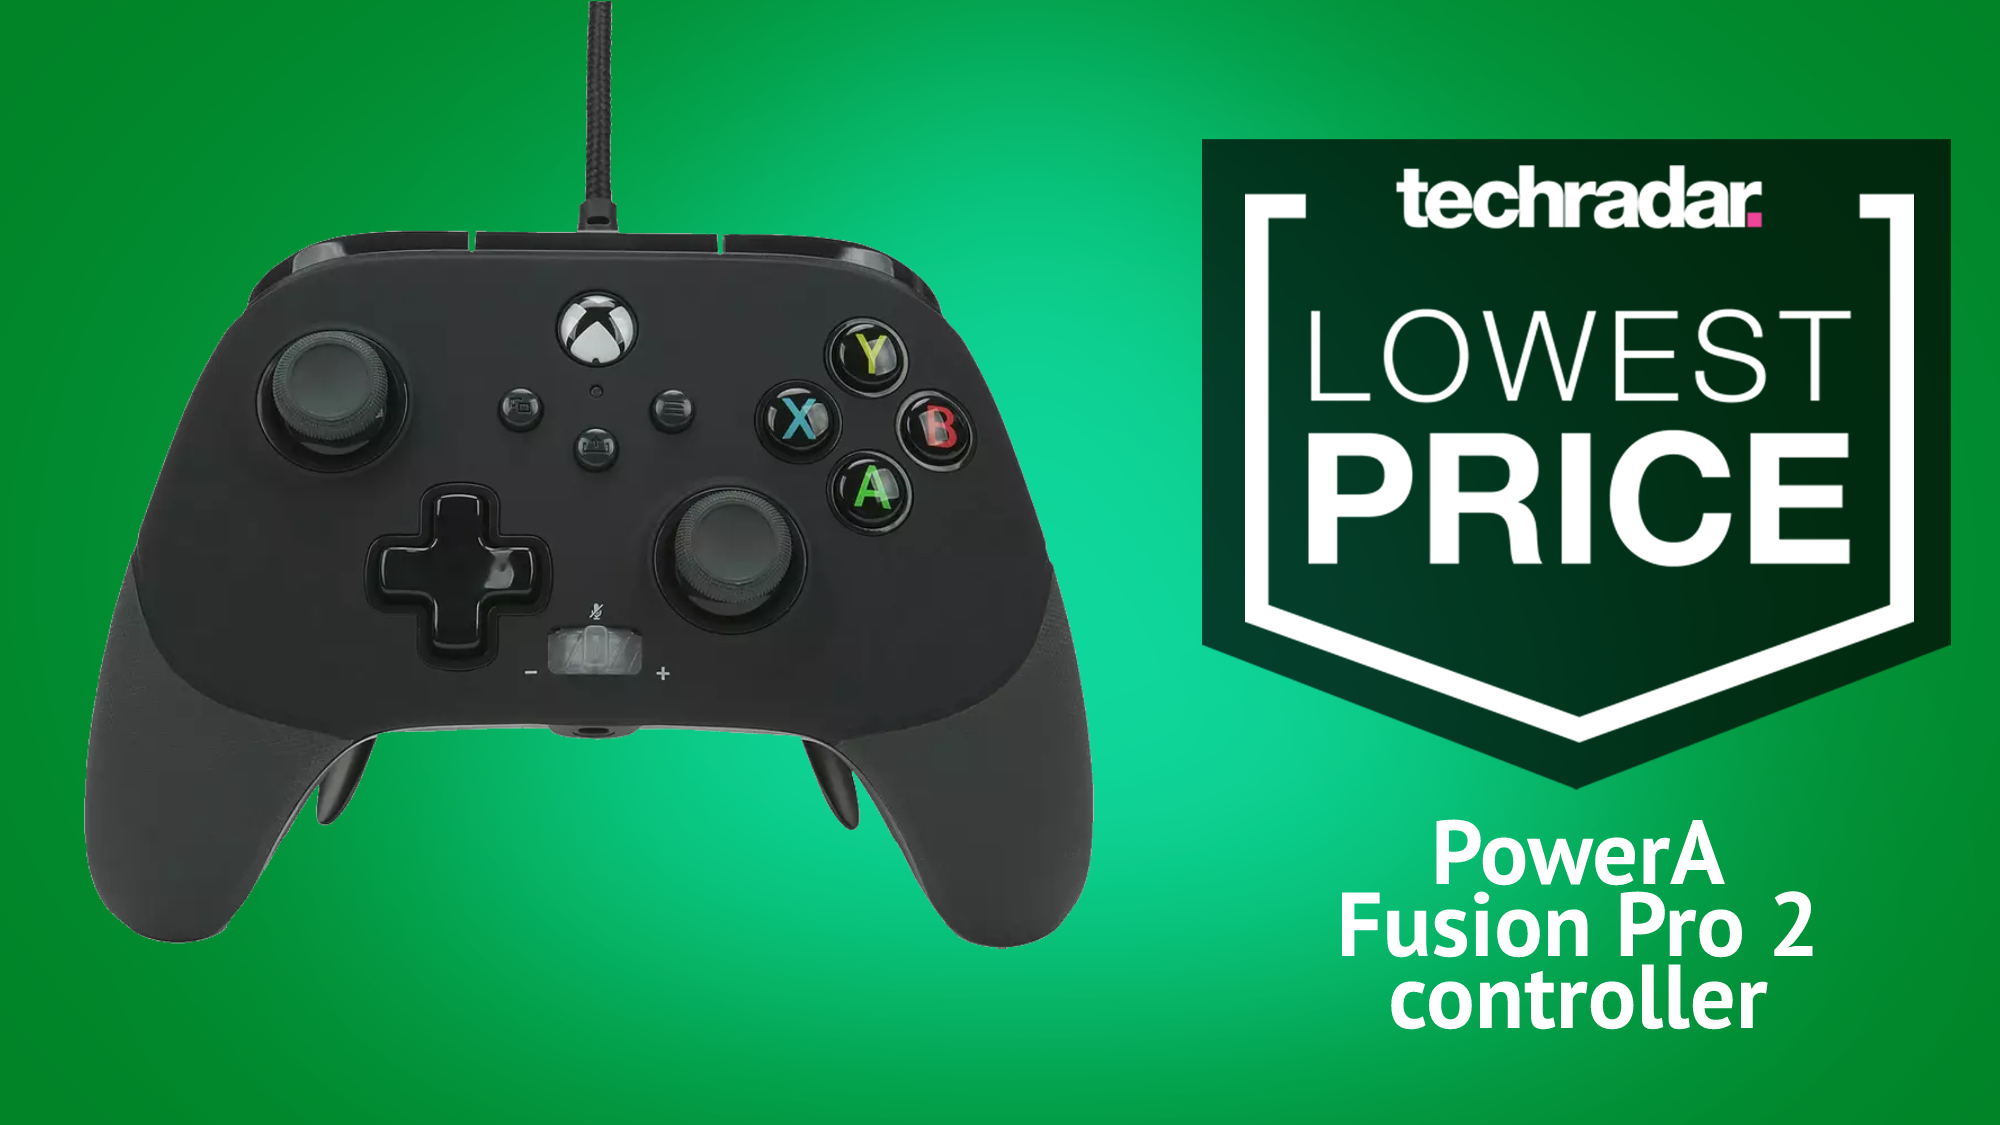 PowerA Fusion Pro 2 Black Friday deal